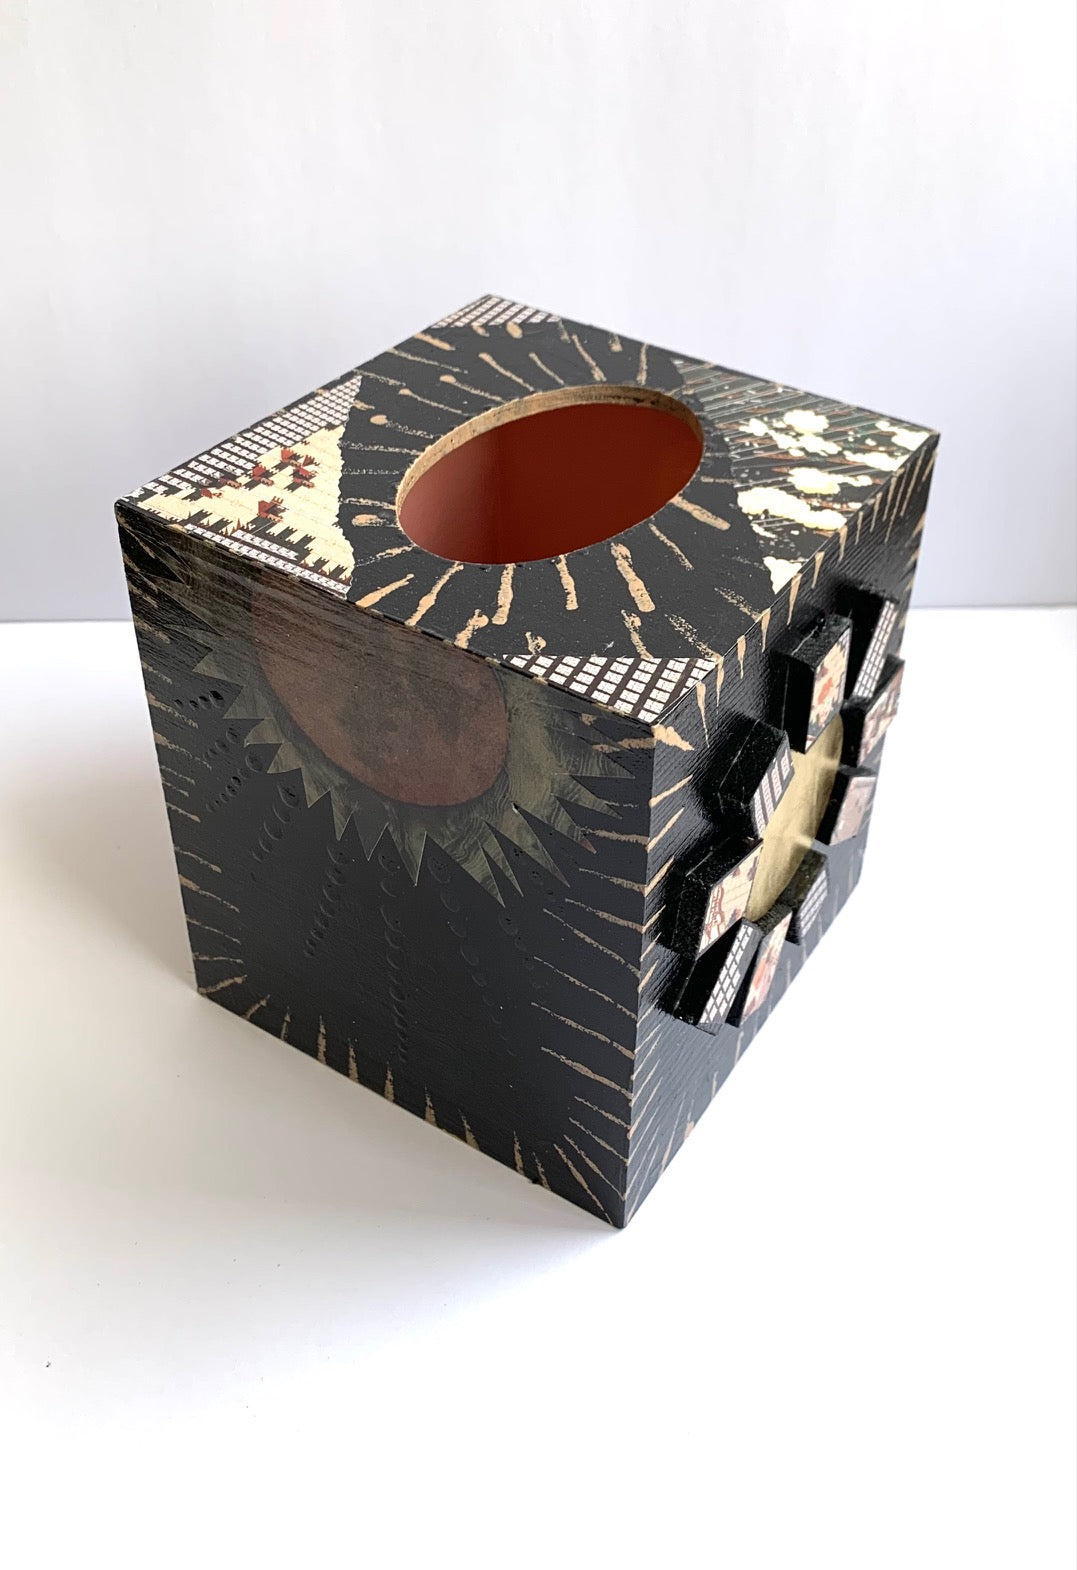 Wood painted mixed media tissue box-sun tree moon eye